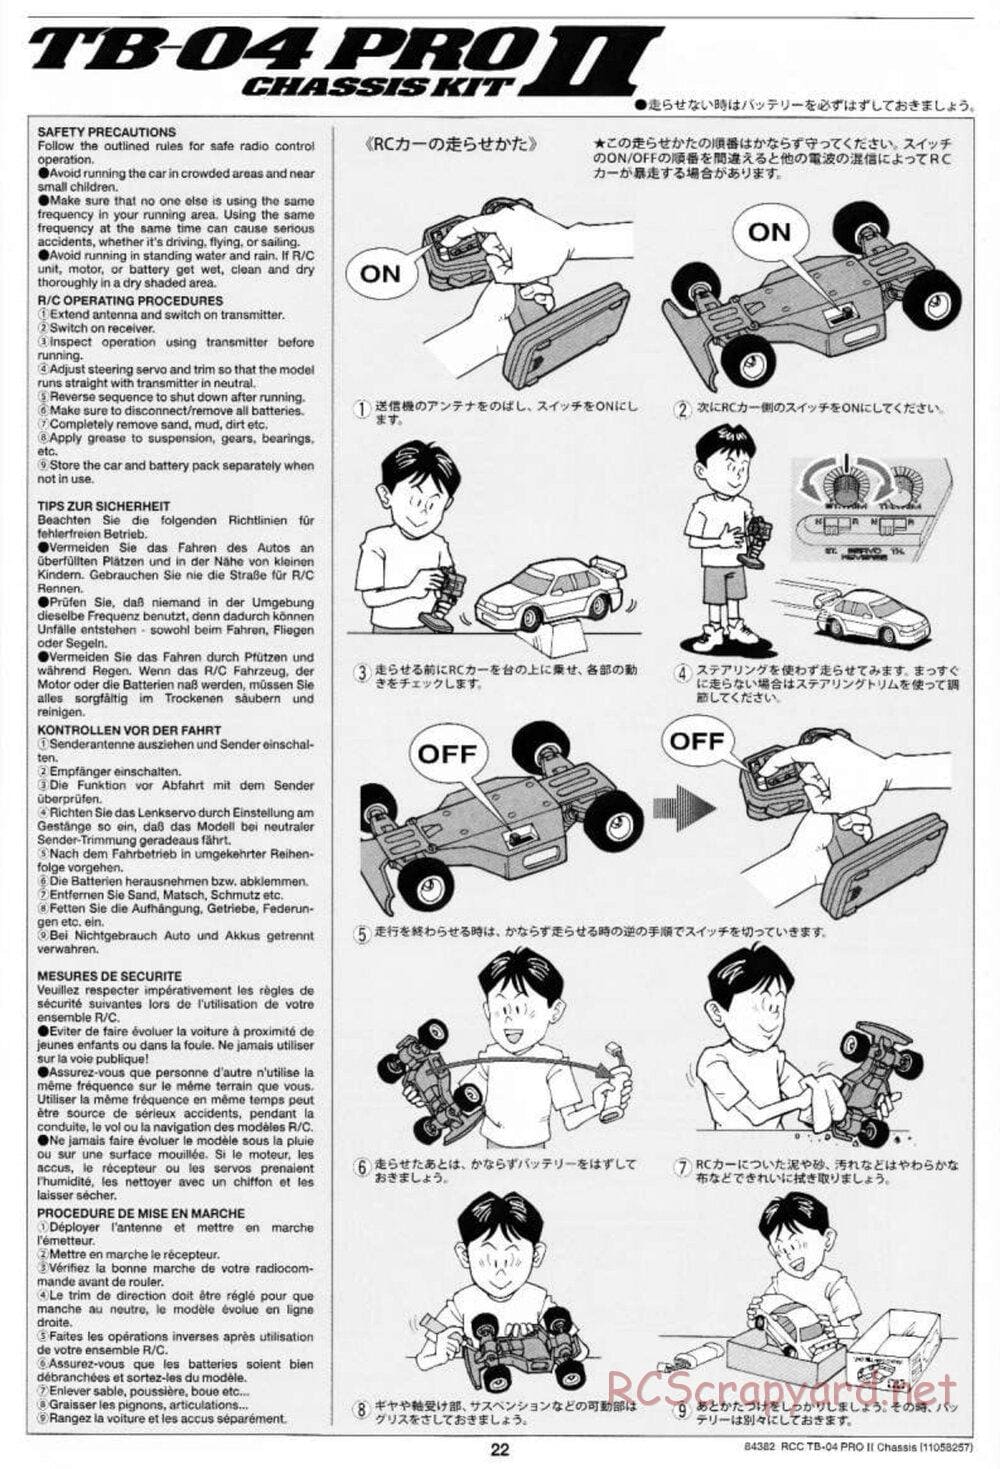 Tamiya - TB-04 Pro II Chassis - Manual - Page 22